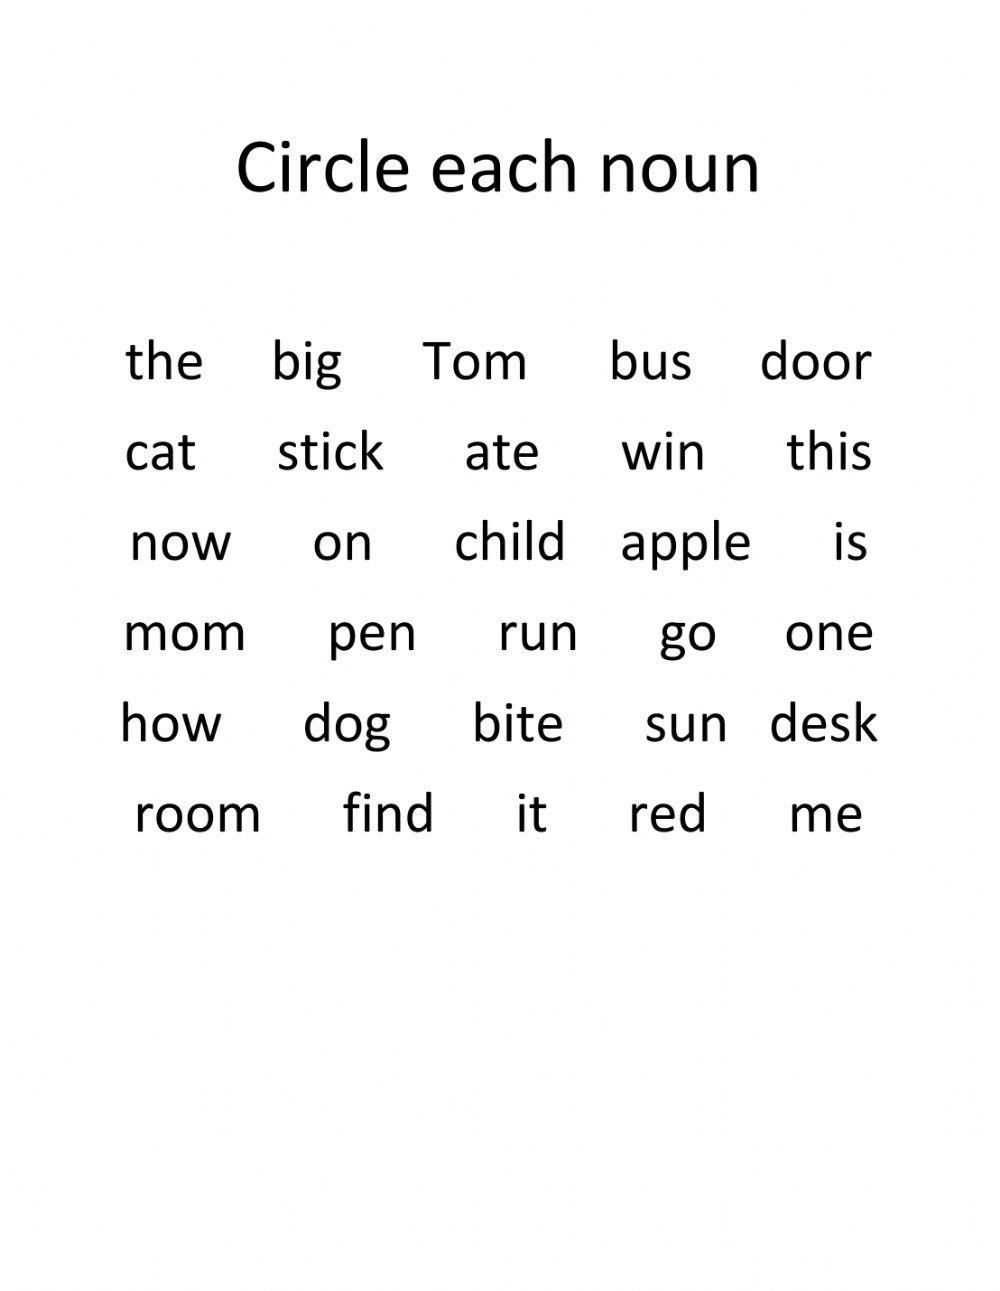 Identifying nouns